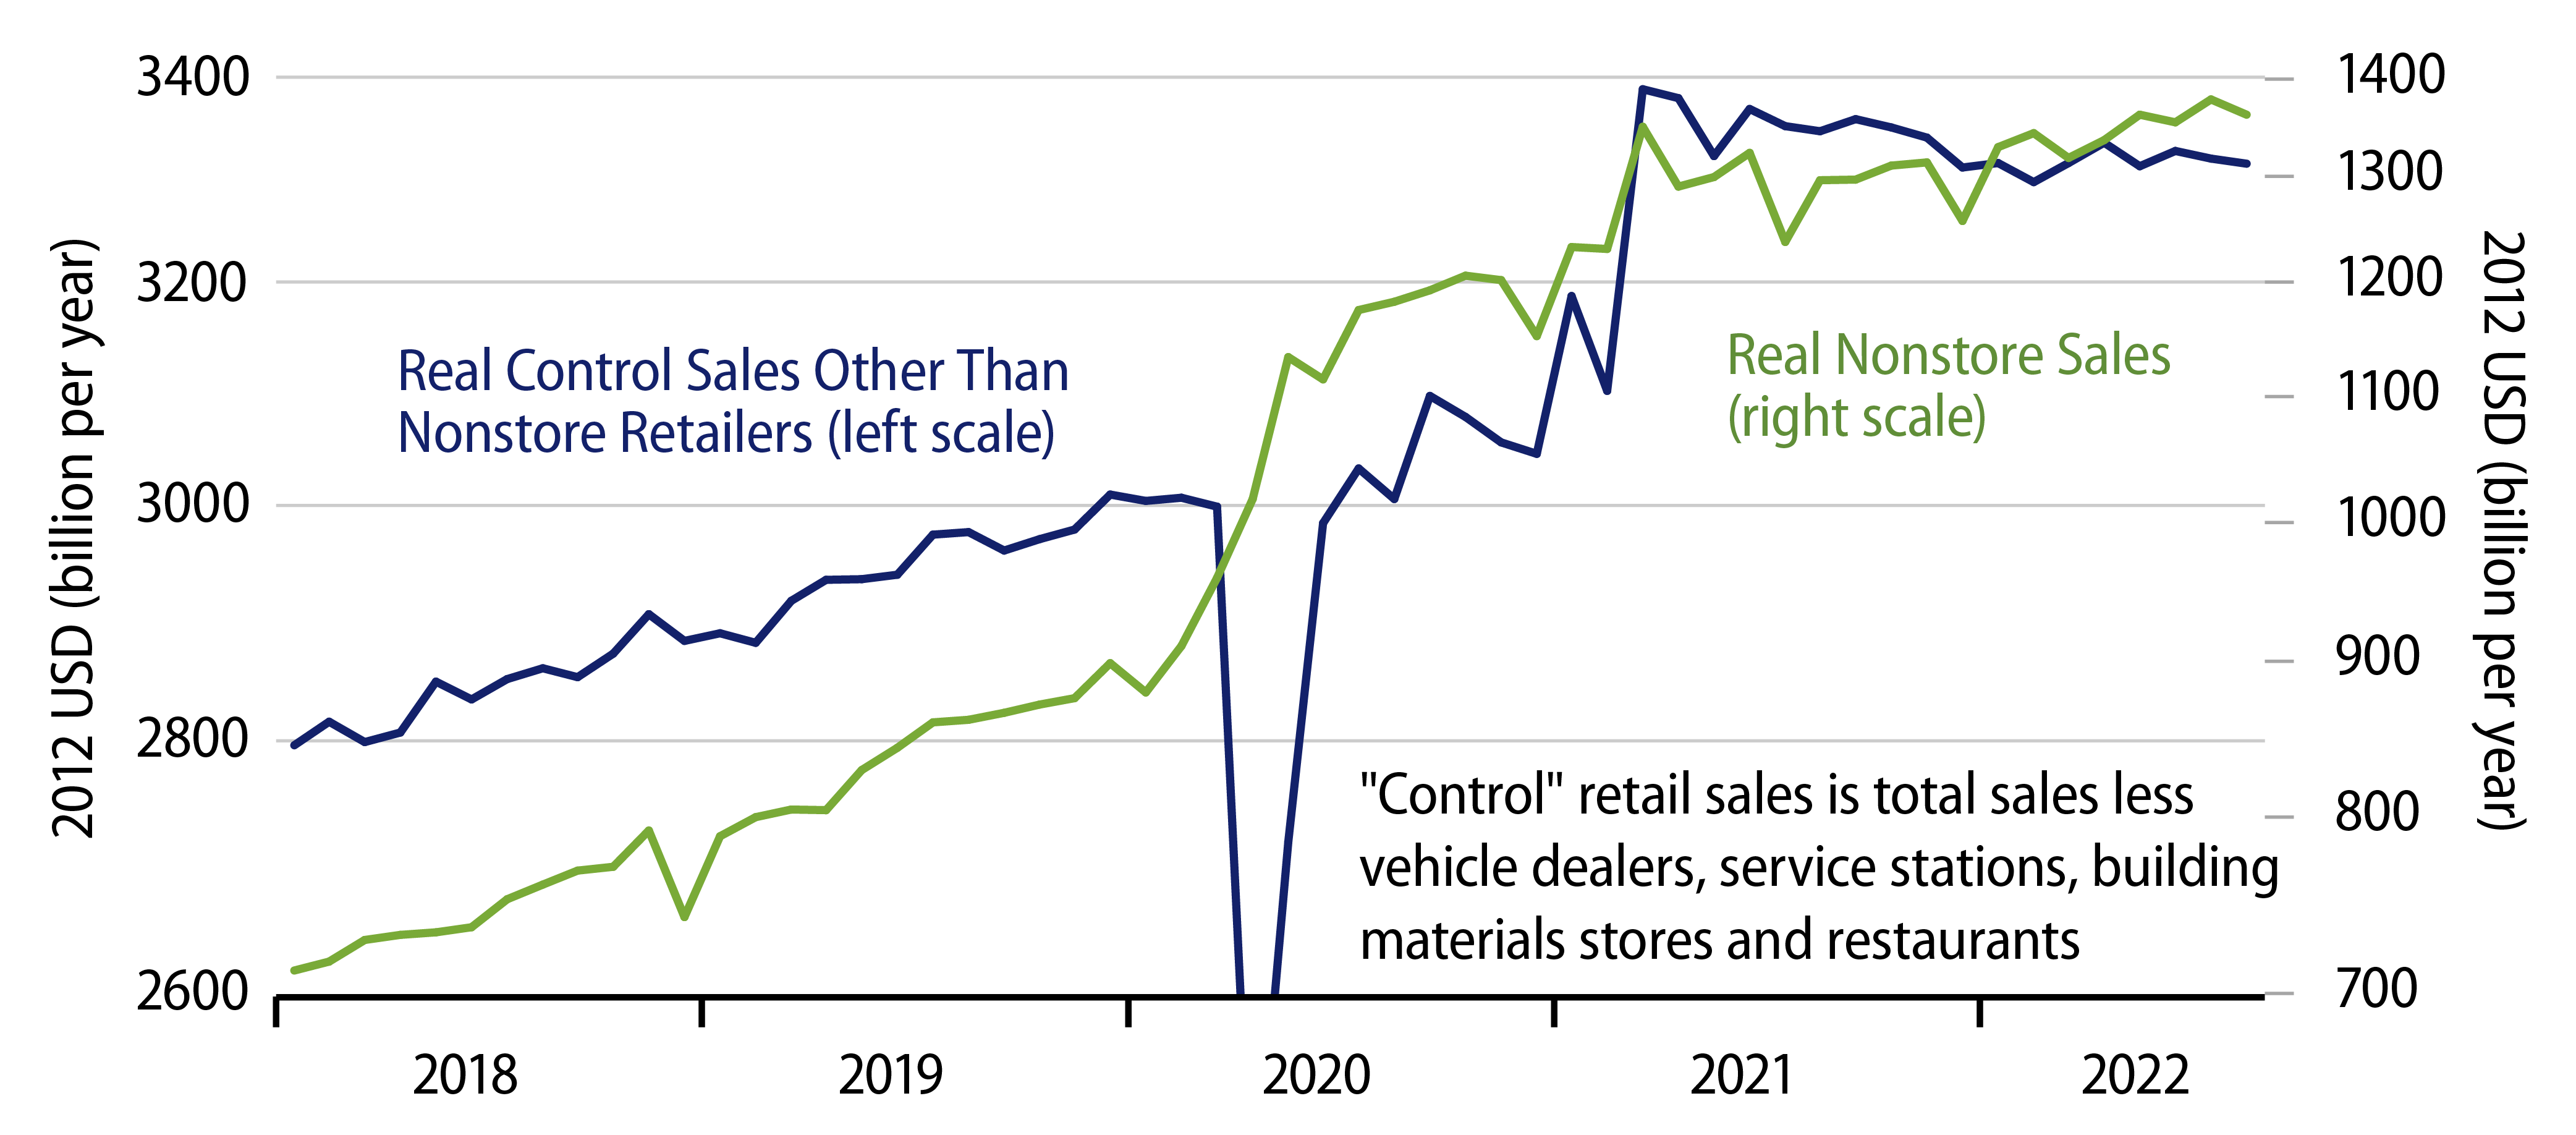 Real 'Control' Retail Sales: Brick-and-Mortar vs Online